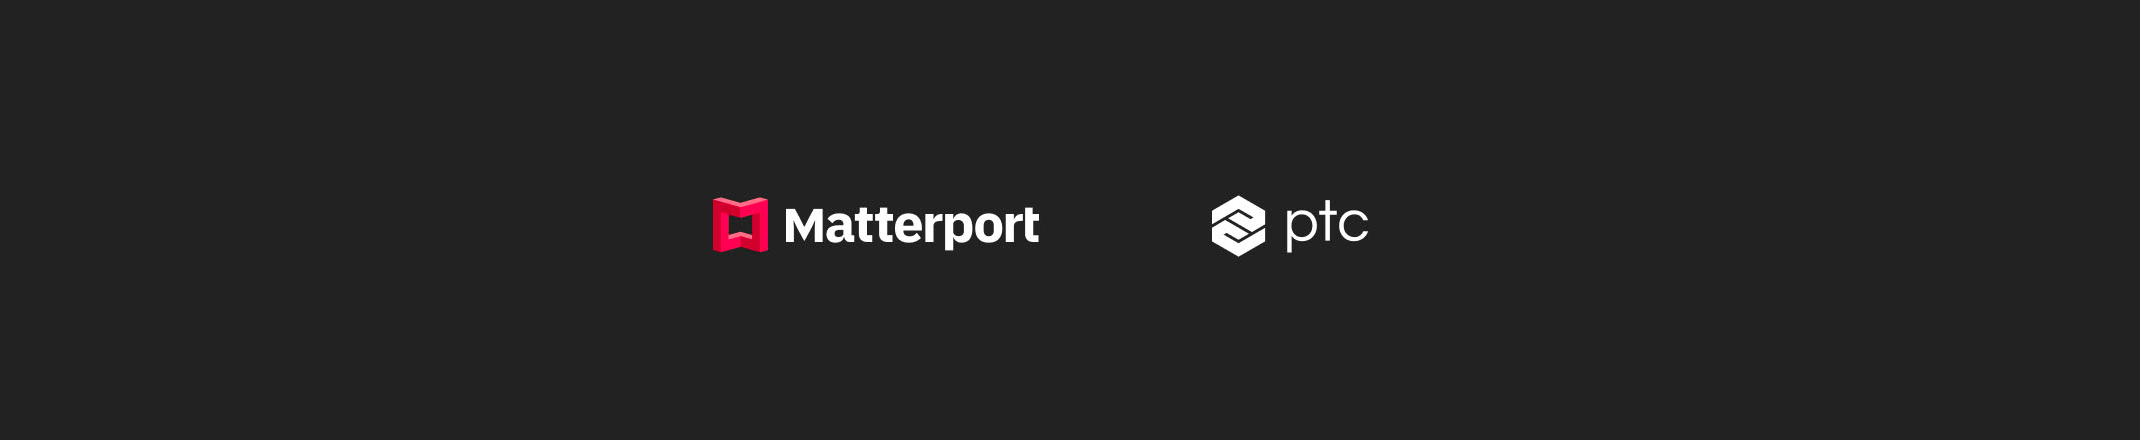 PTC and Matterport Logos